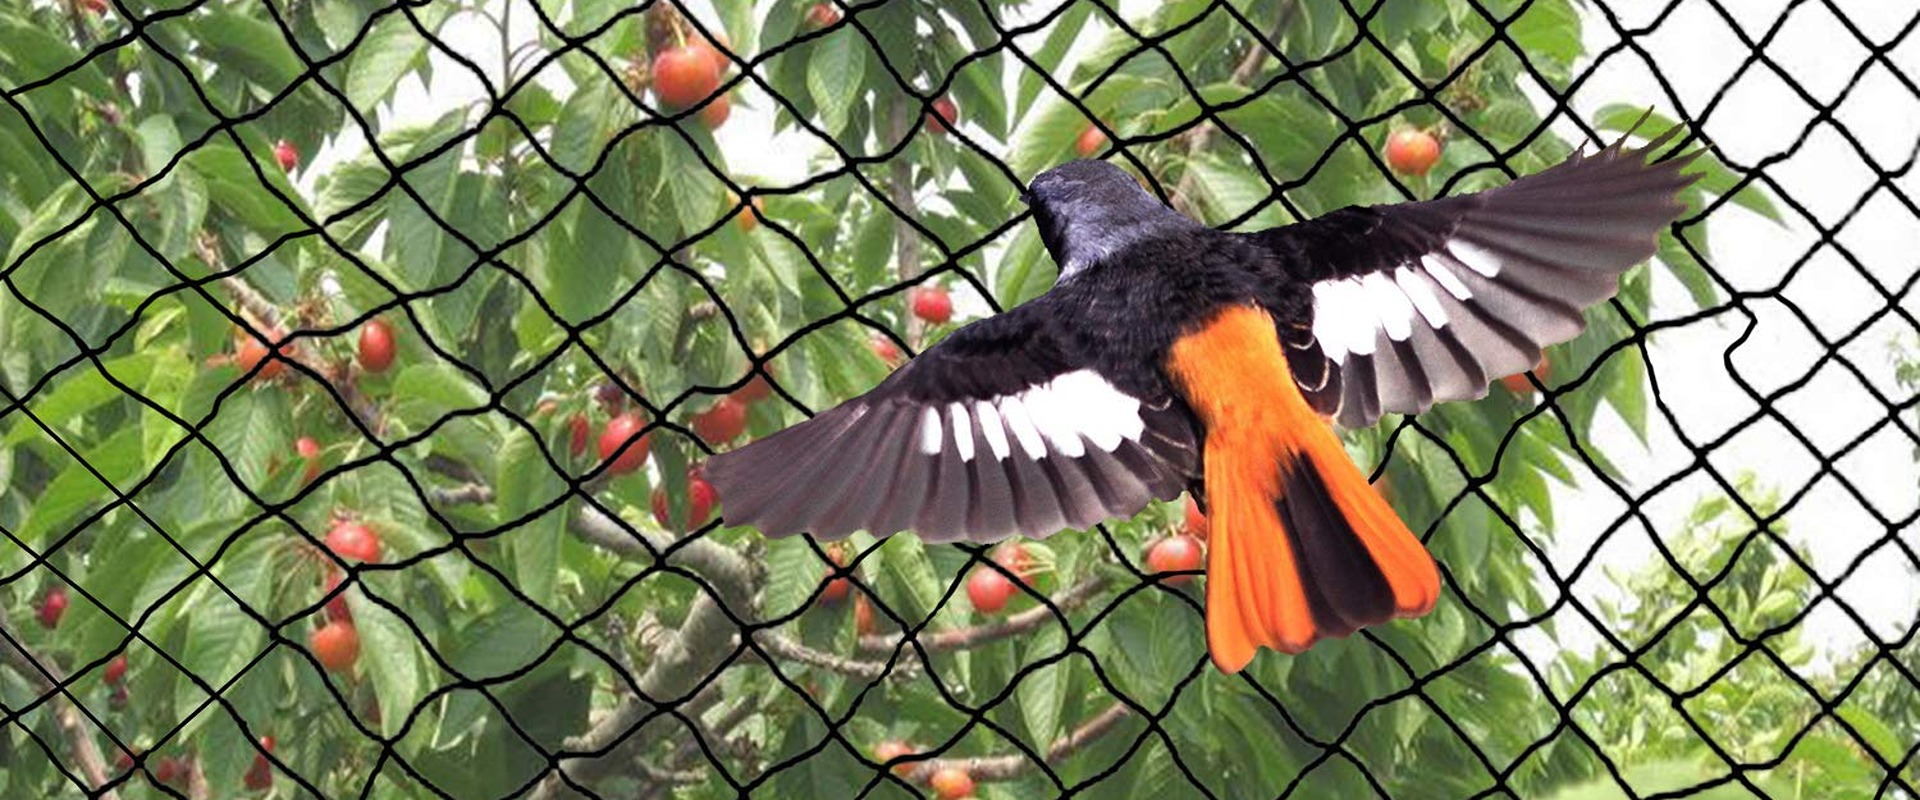 Get Effective Anti Bird Net Solutions for Farming Success